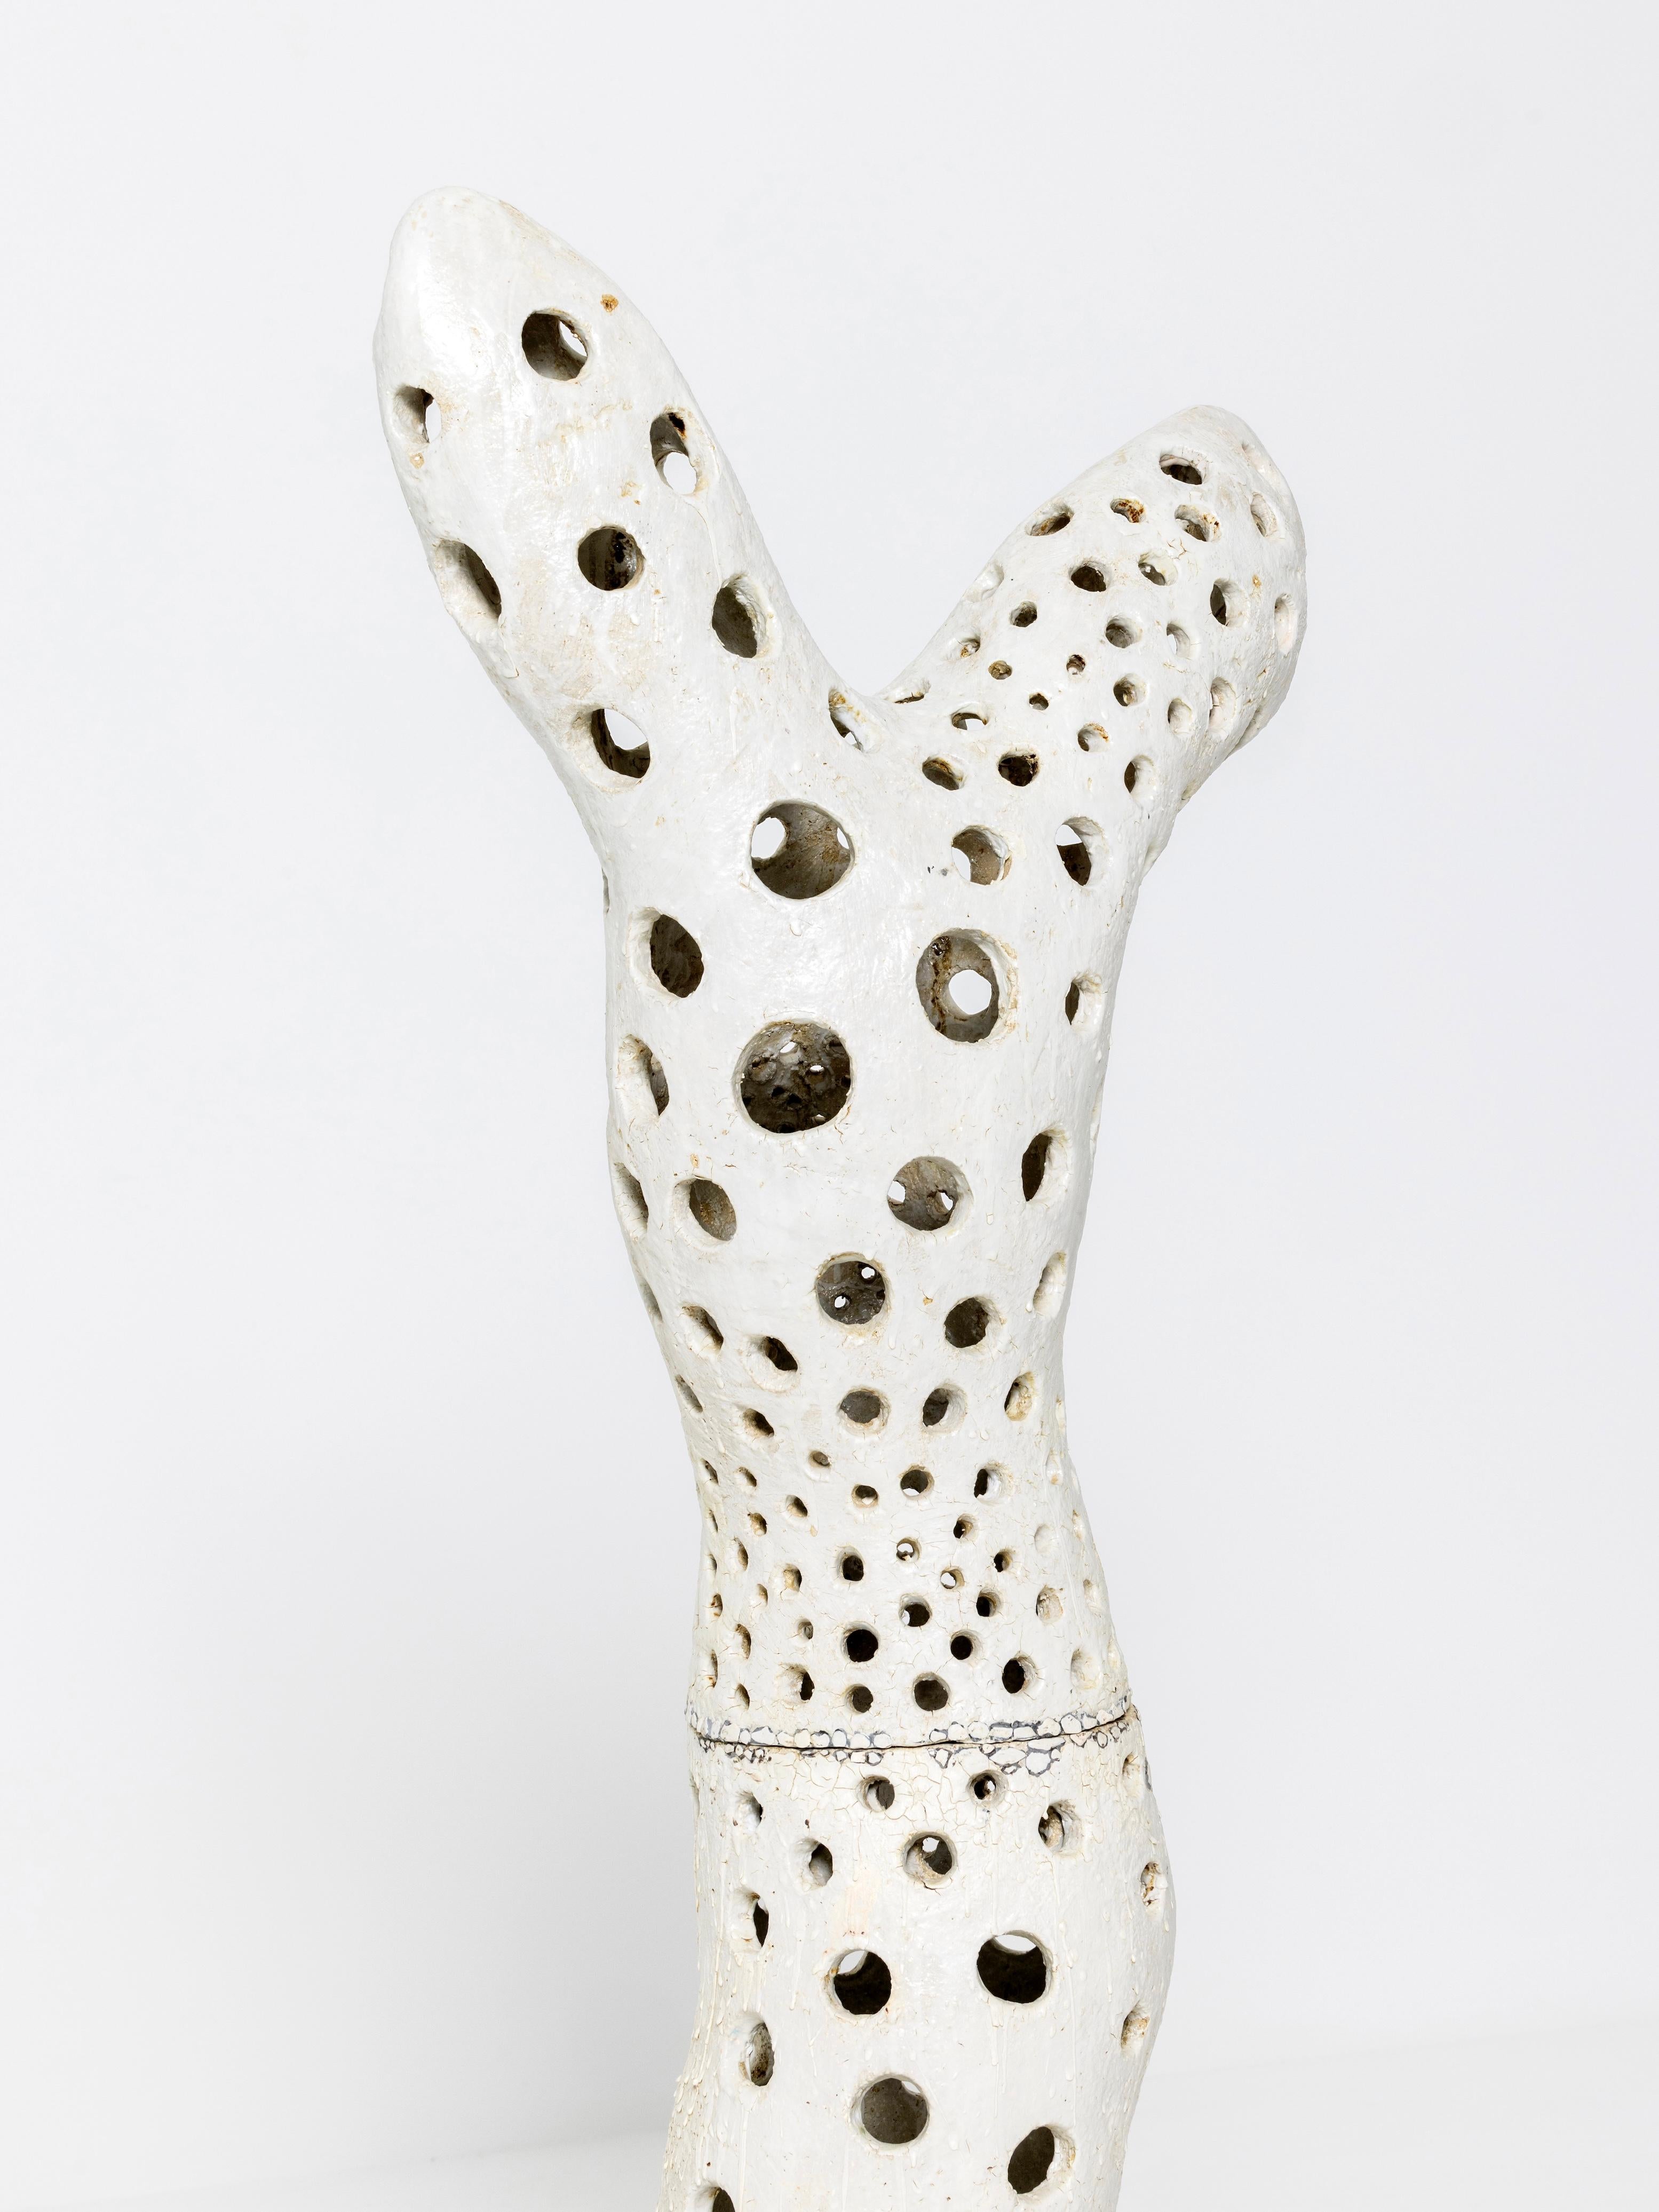 Porcelain Contemporary Ceramic Sculpture 